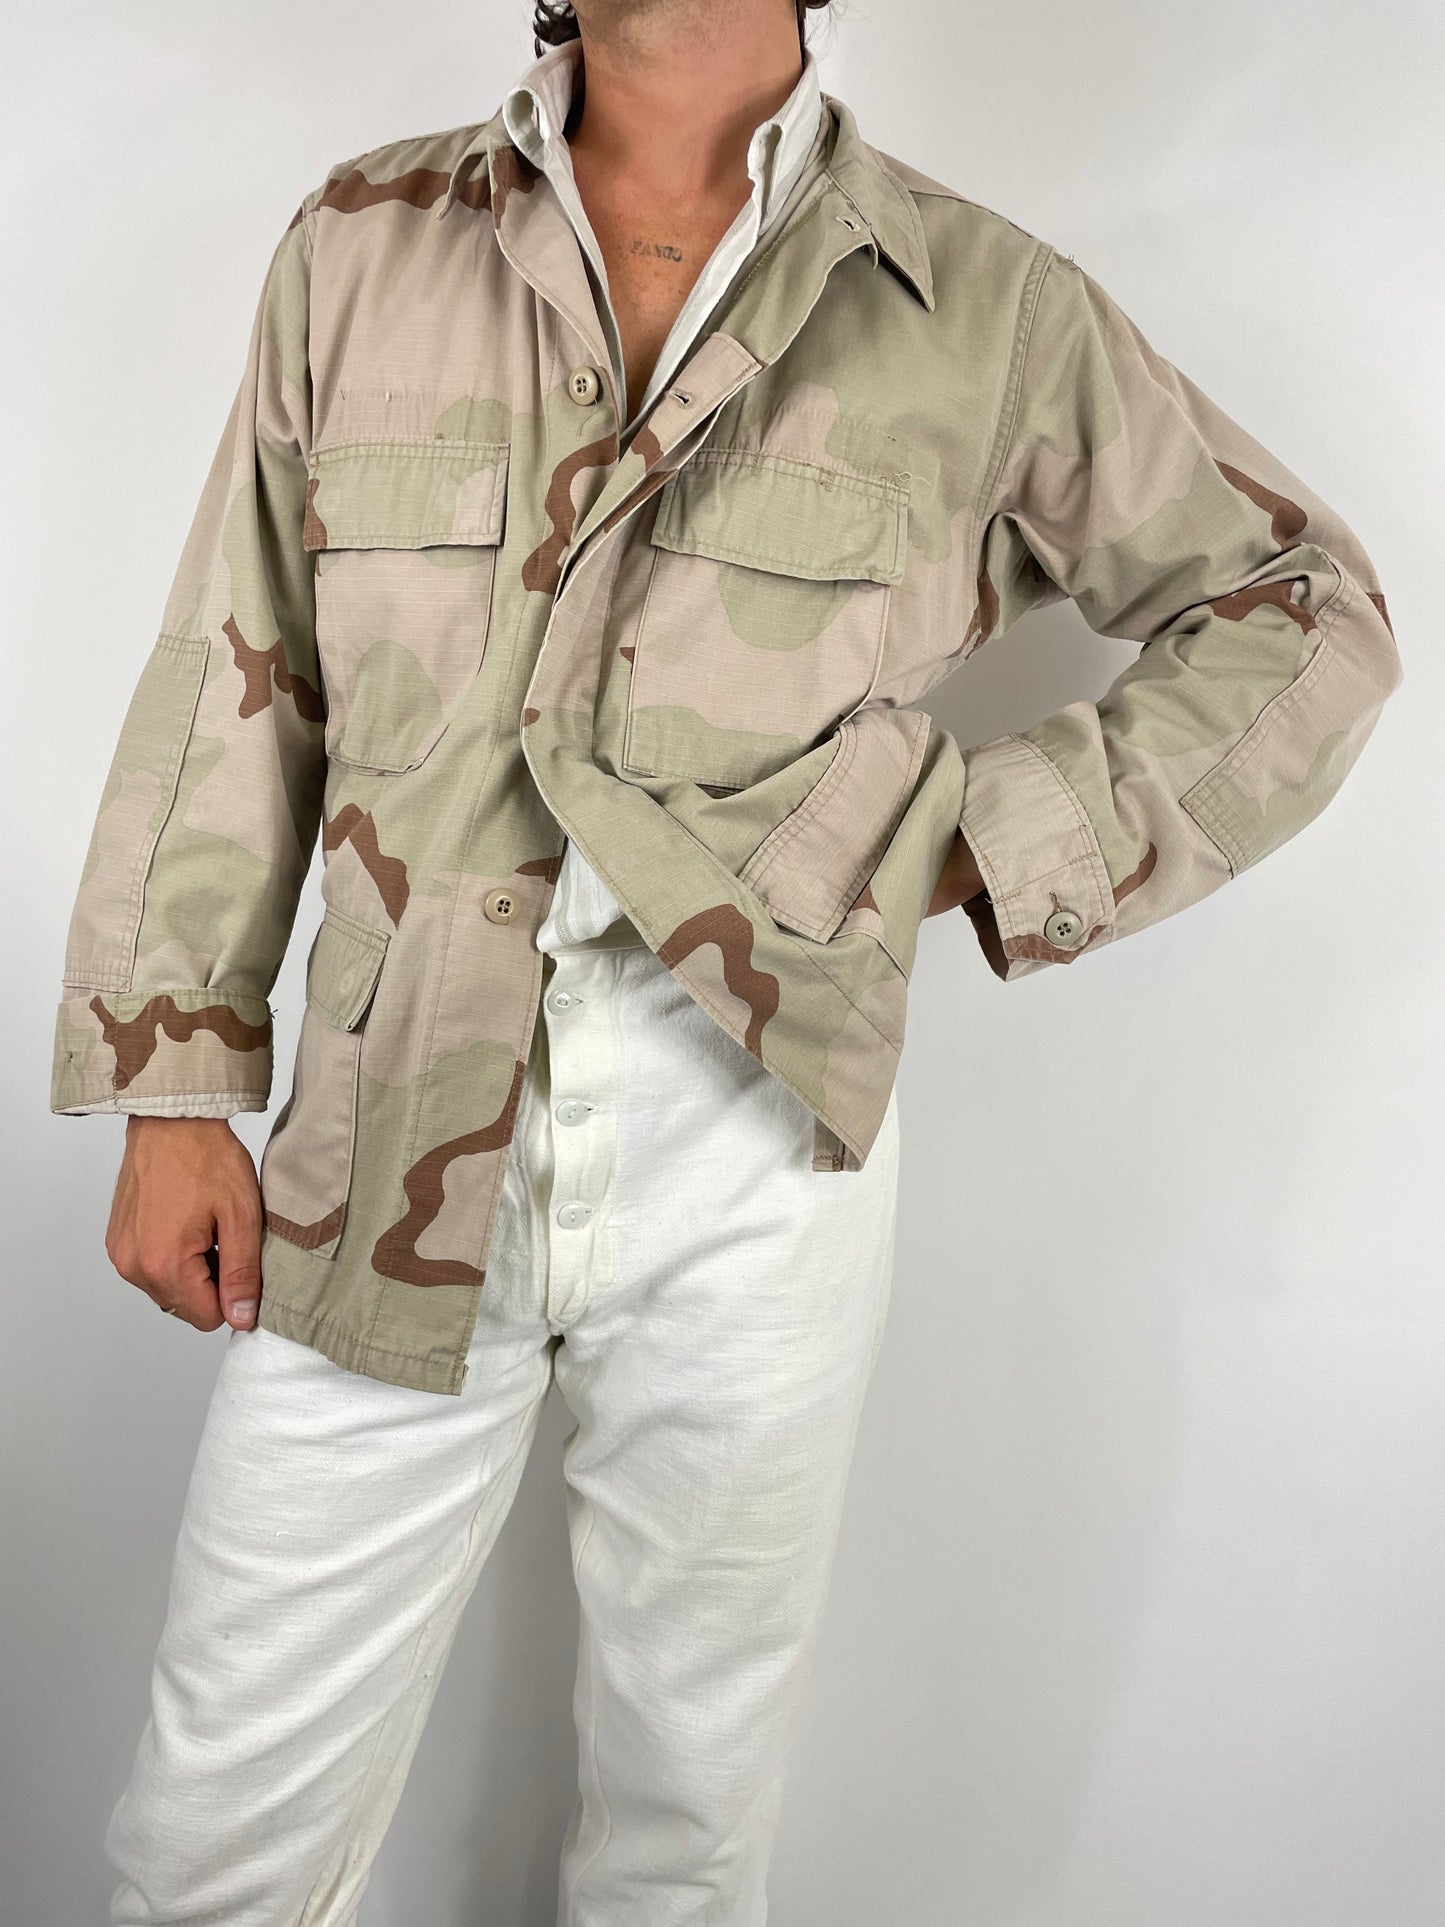 Field jacket desert camo pattern combat  U.S.A